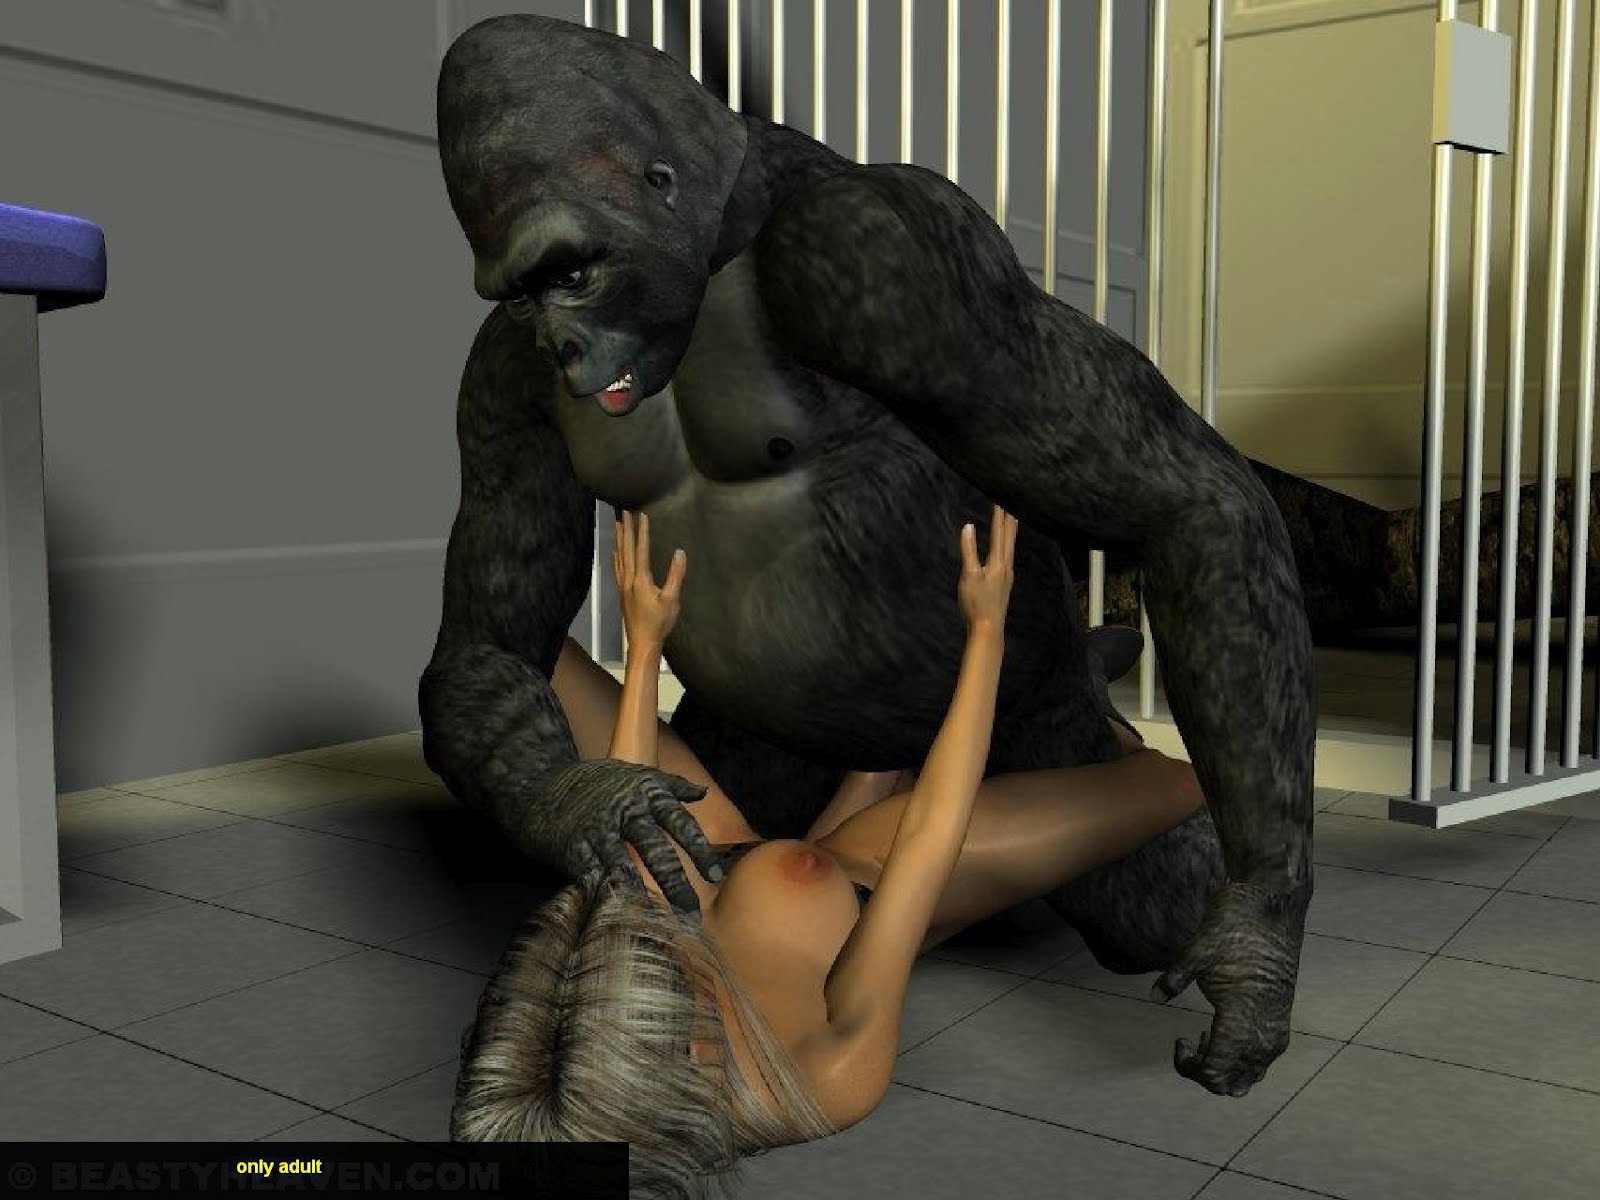 Gorila Sex With Women - Girl with gorilla sex 3gp video pron clips